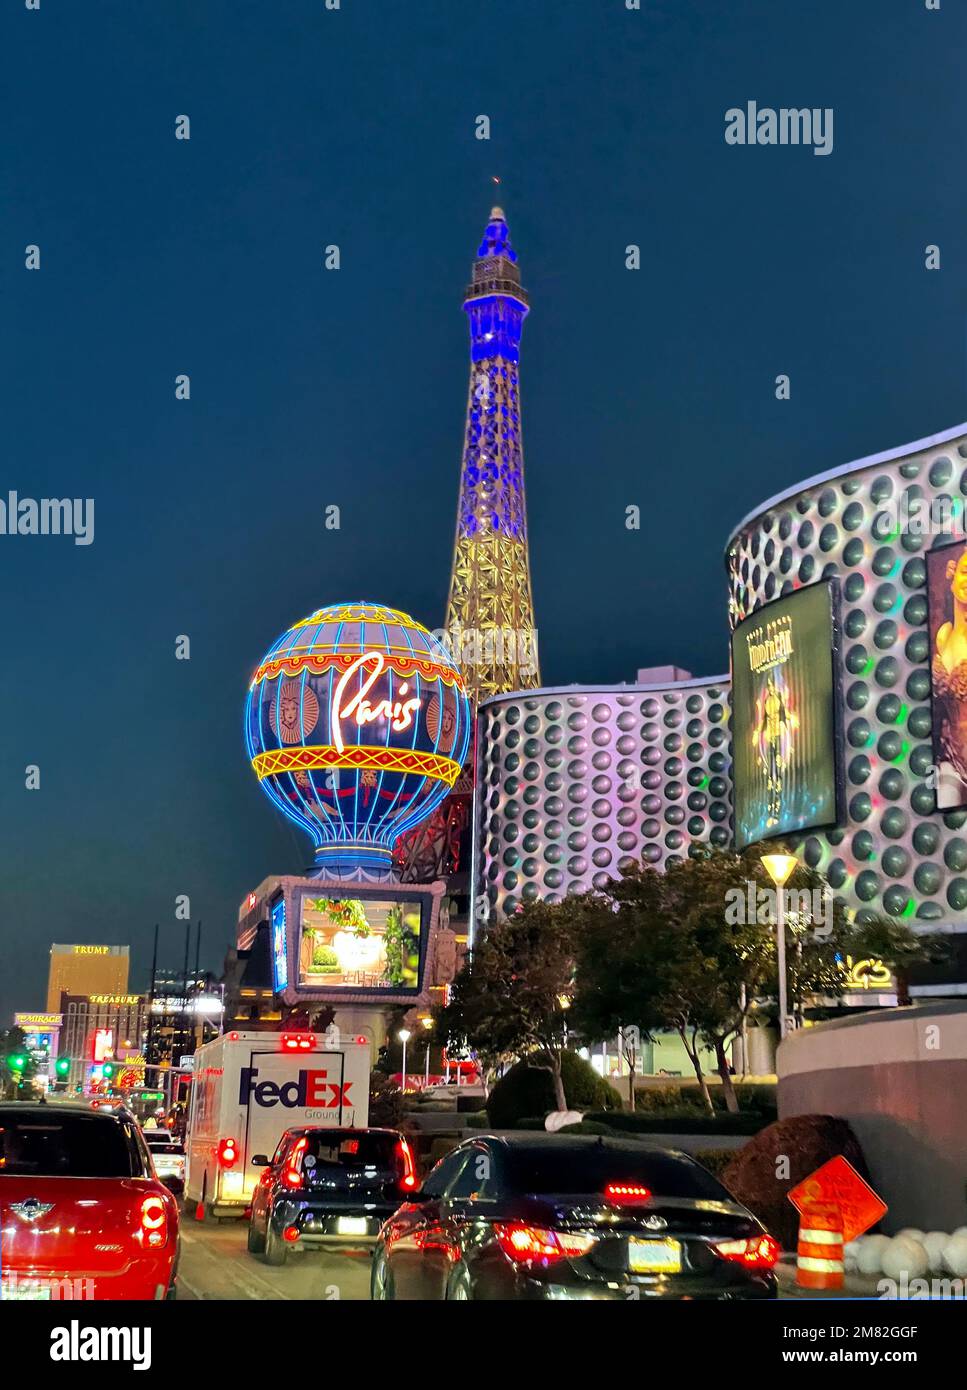 FedEx truck on the Strip near the Paris Hotel, Casino, Las Vegas, Nevada, Eiffel Tower, Stock Photo